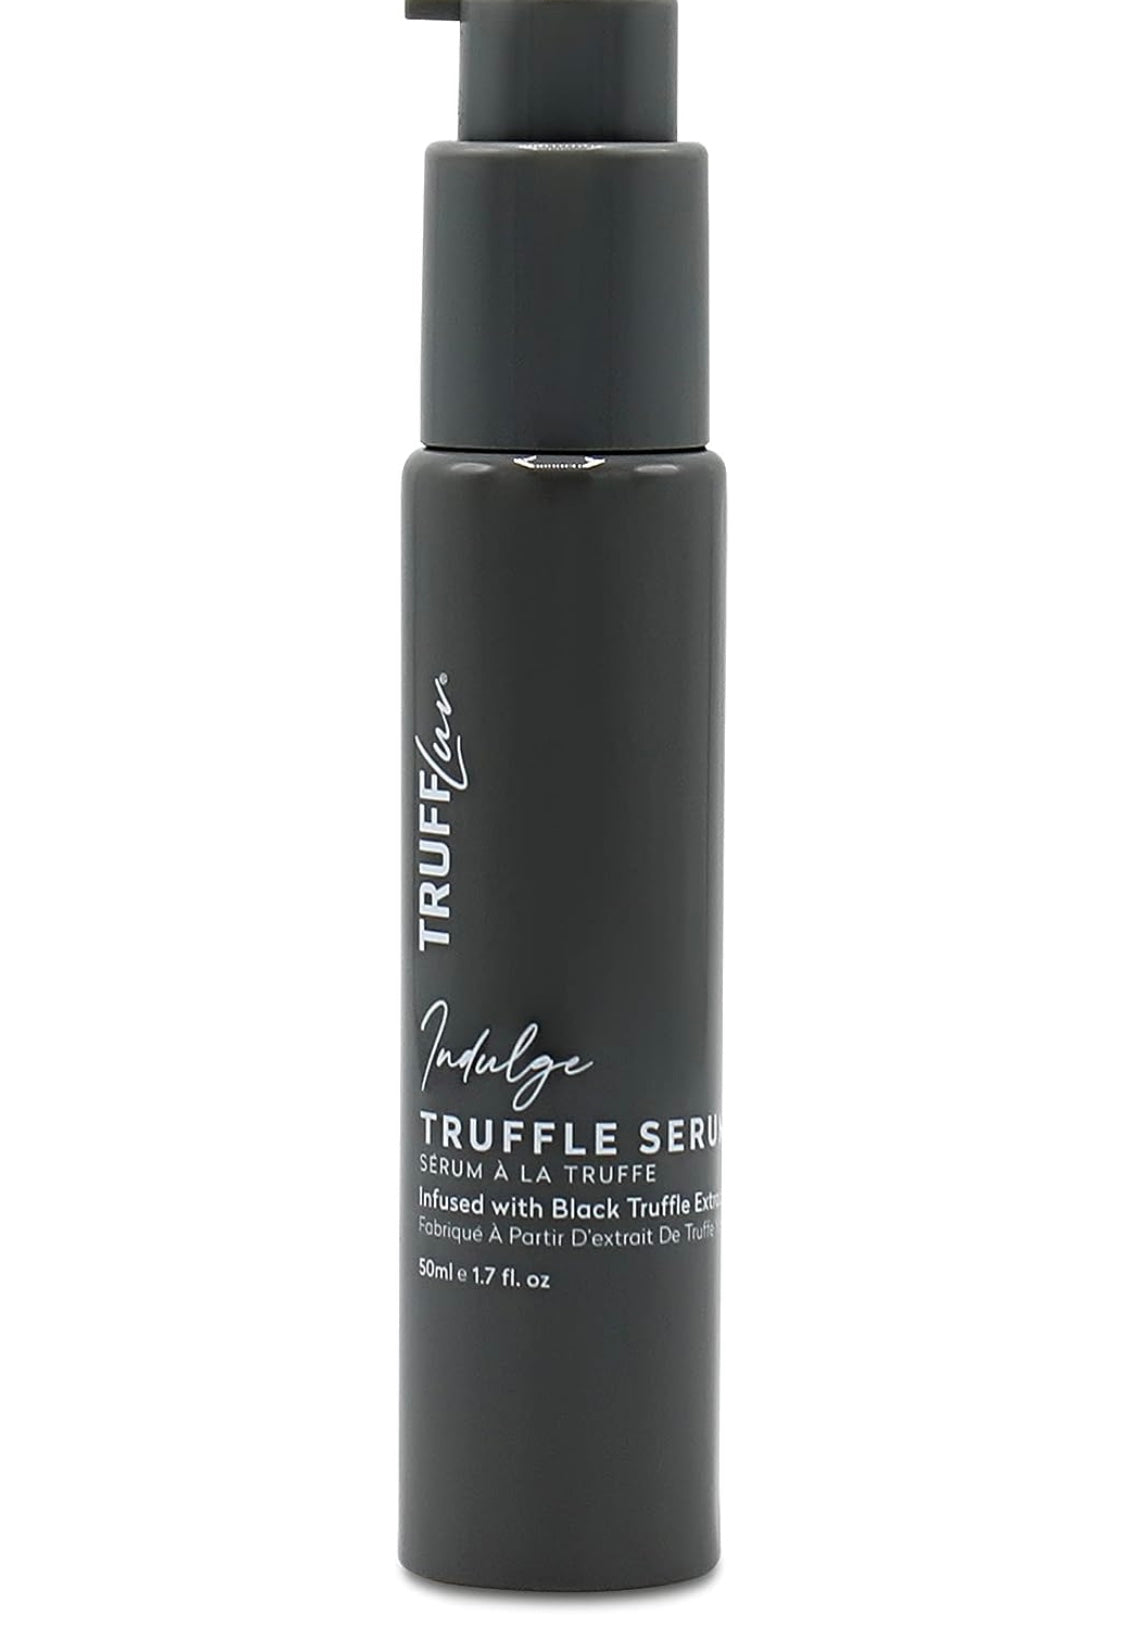 TRUFFLUV - TRUFFLE serum 1.7 fl. oz. / 50 ml